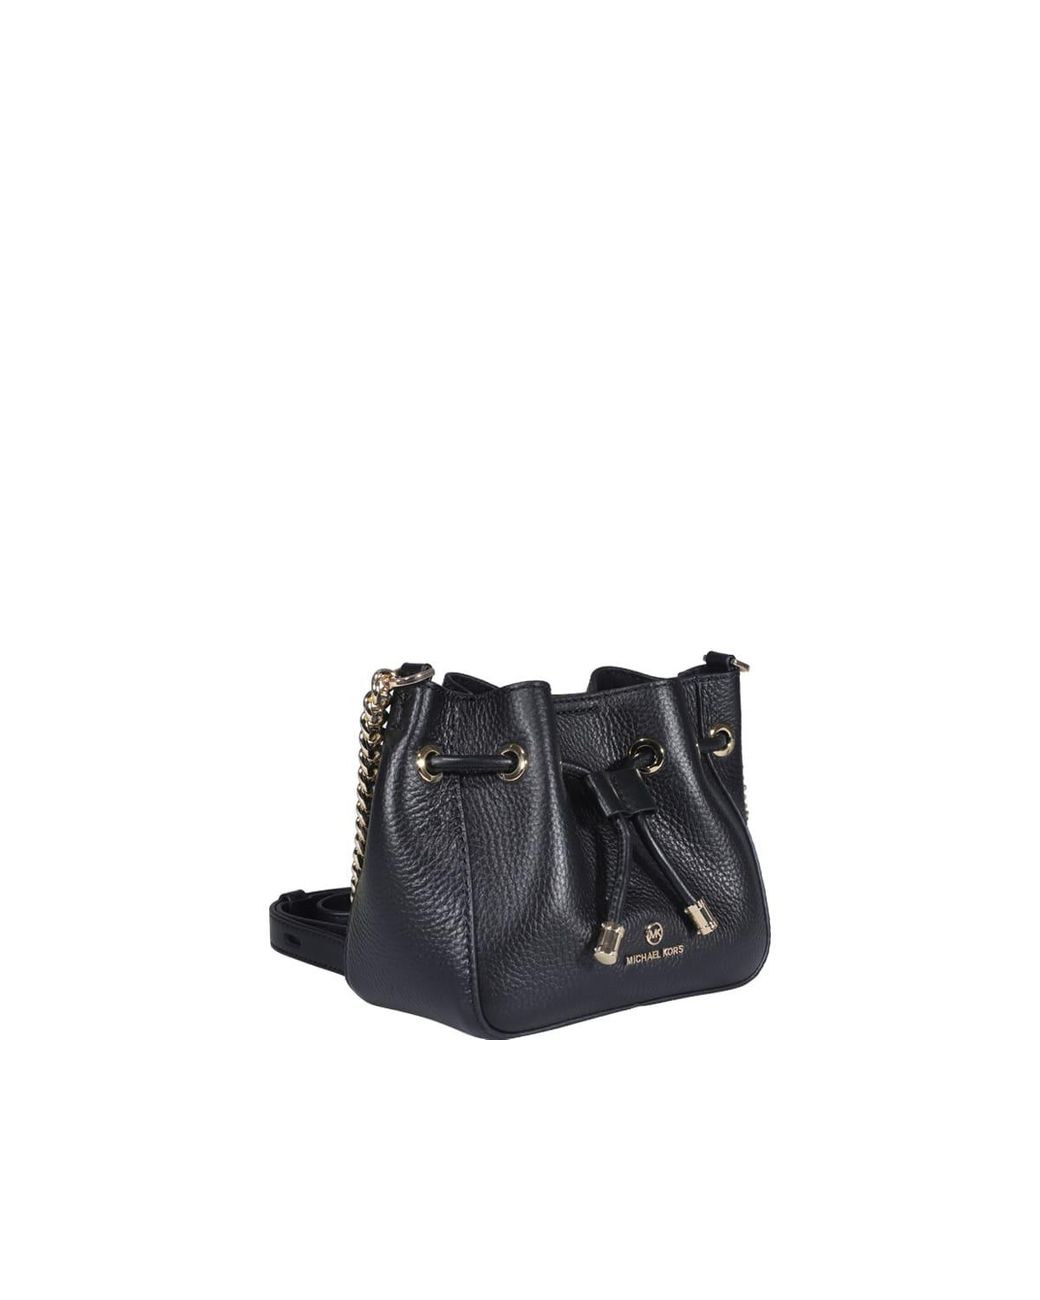 MICHAEL KORS: Phoebe Michael bag in grained leather - Black